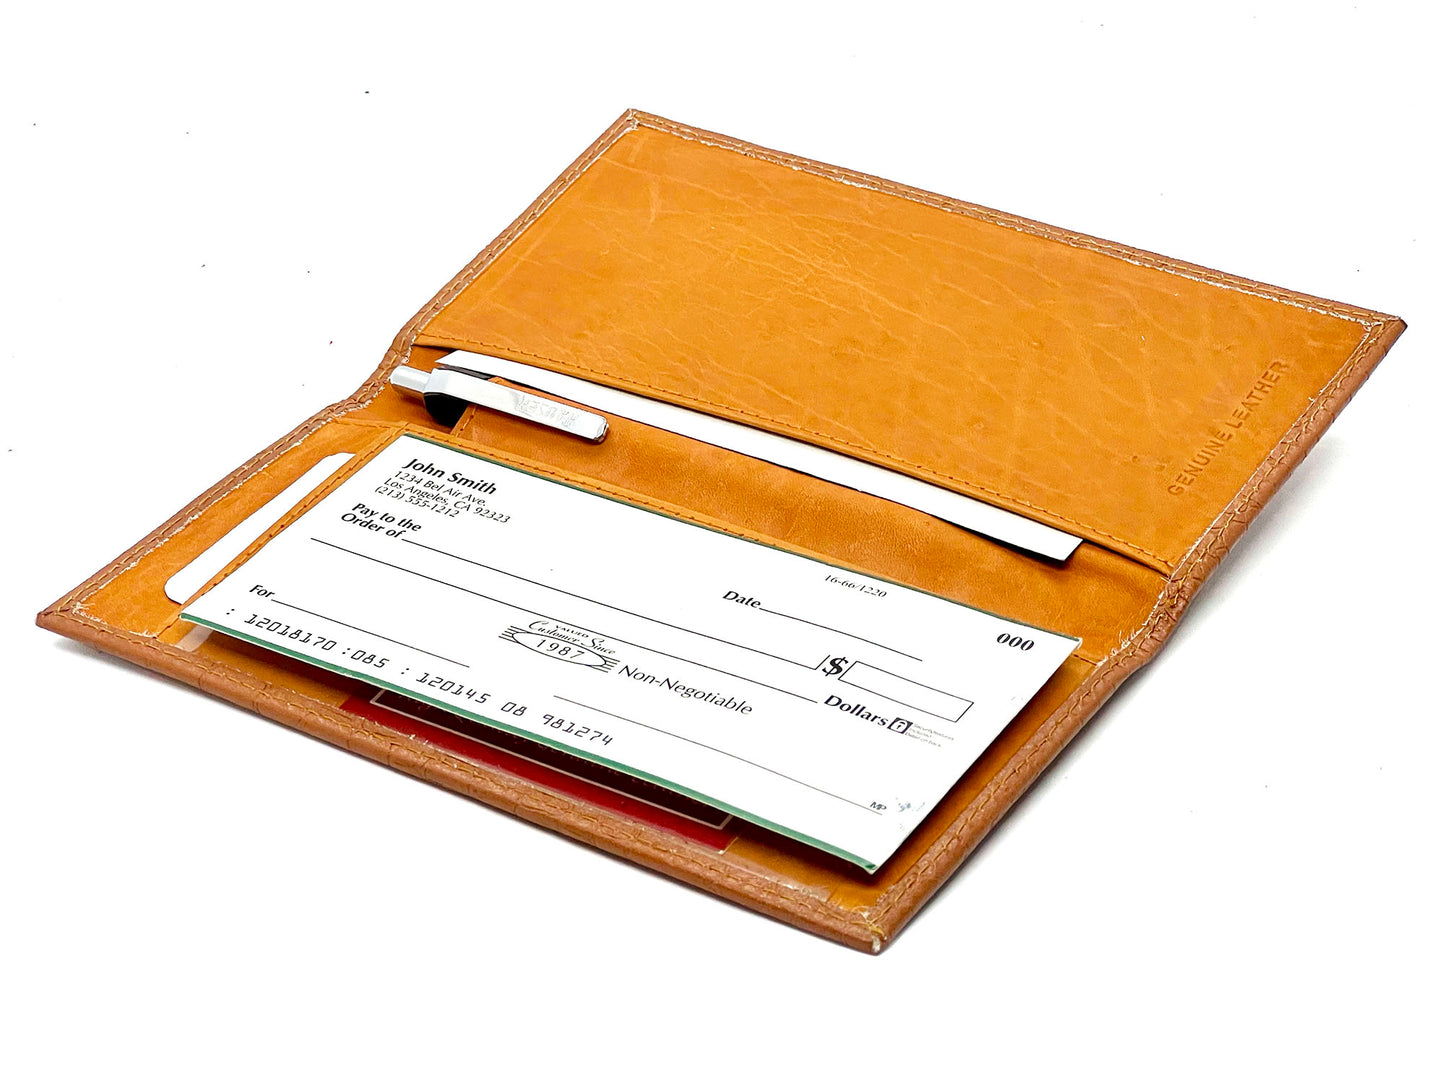 Genuine Leather Standard Plain Checkbook Cover Long Wallet Men Women Many Colors